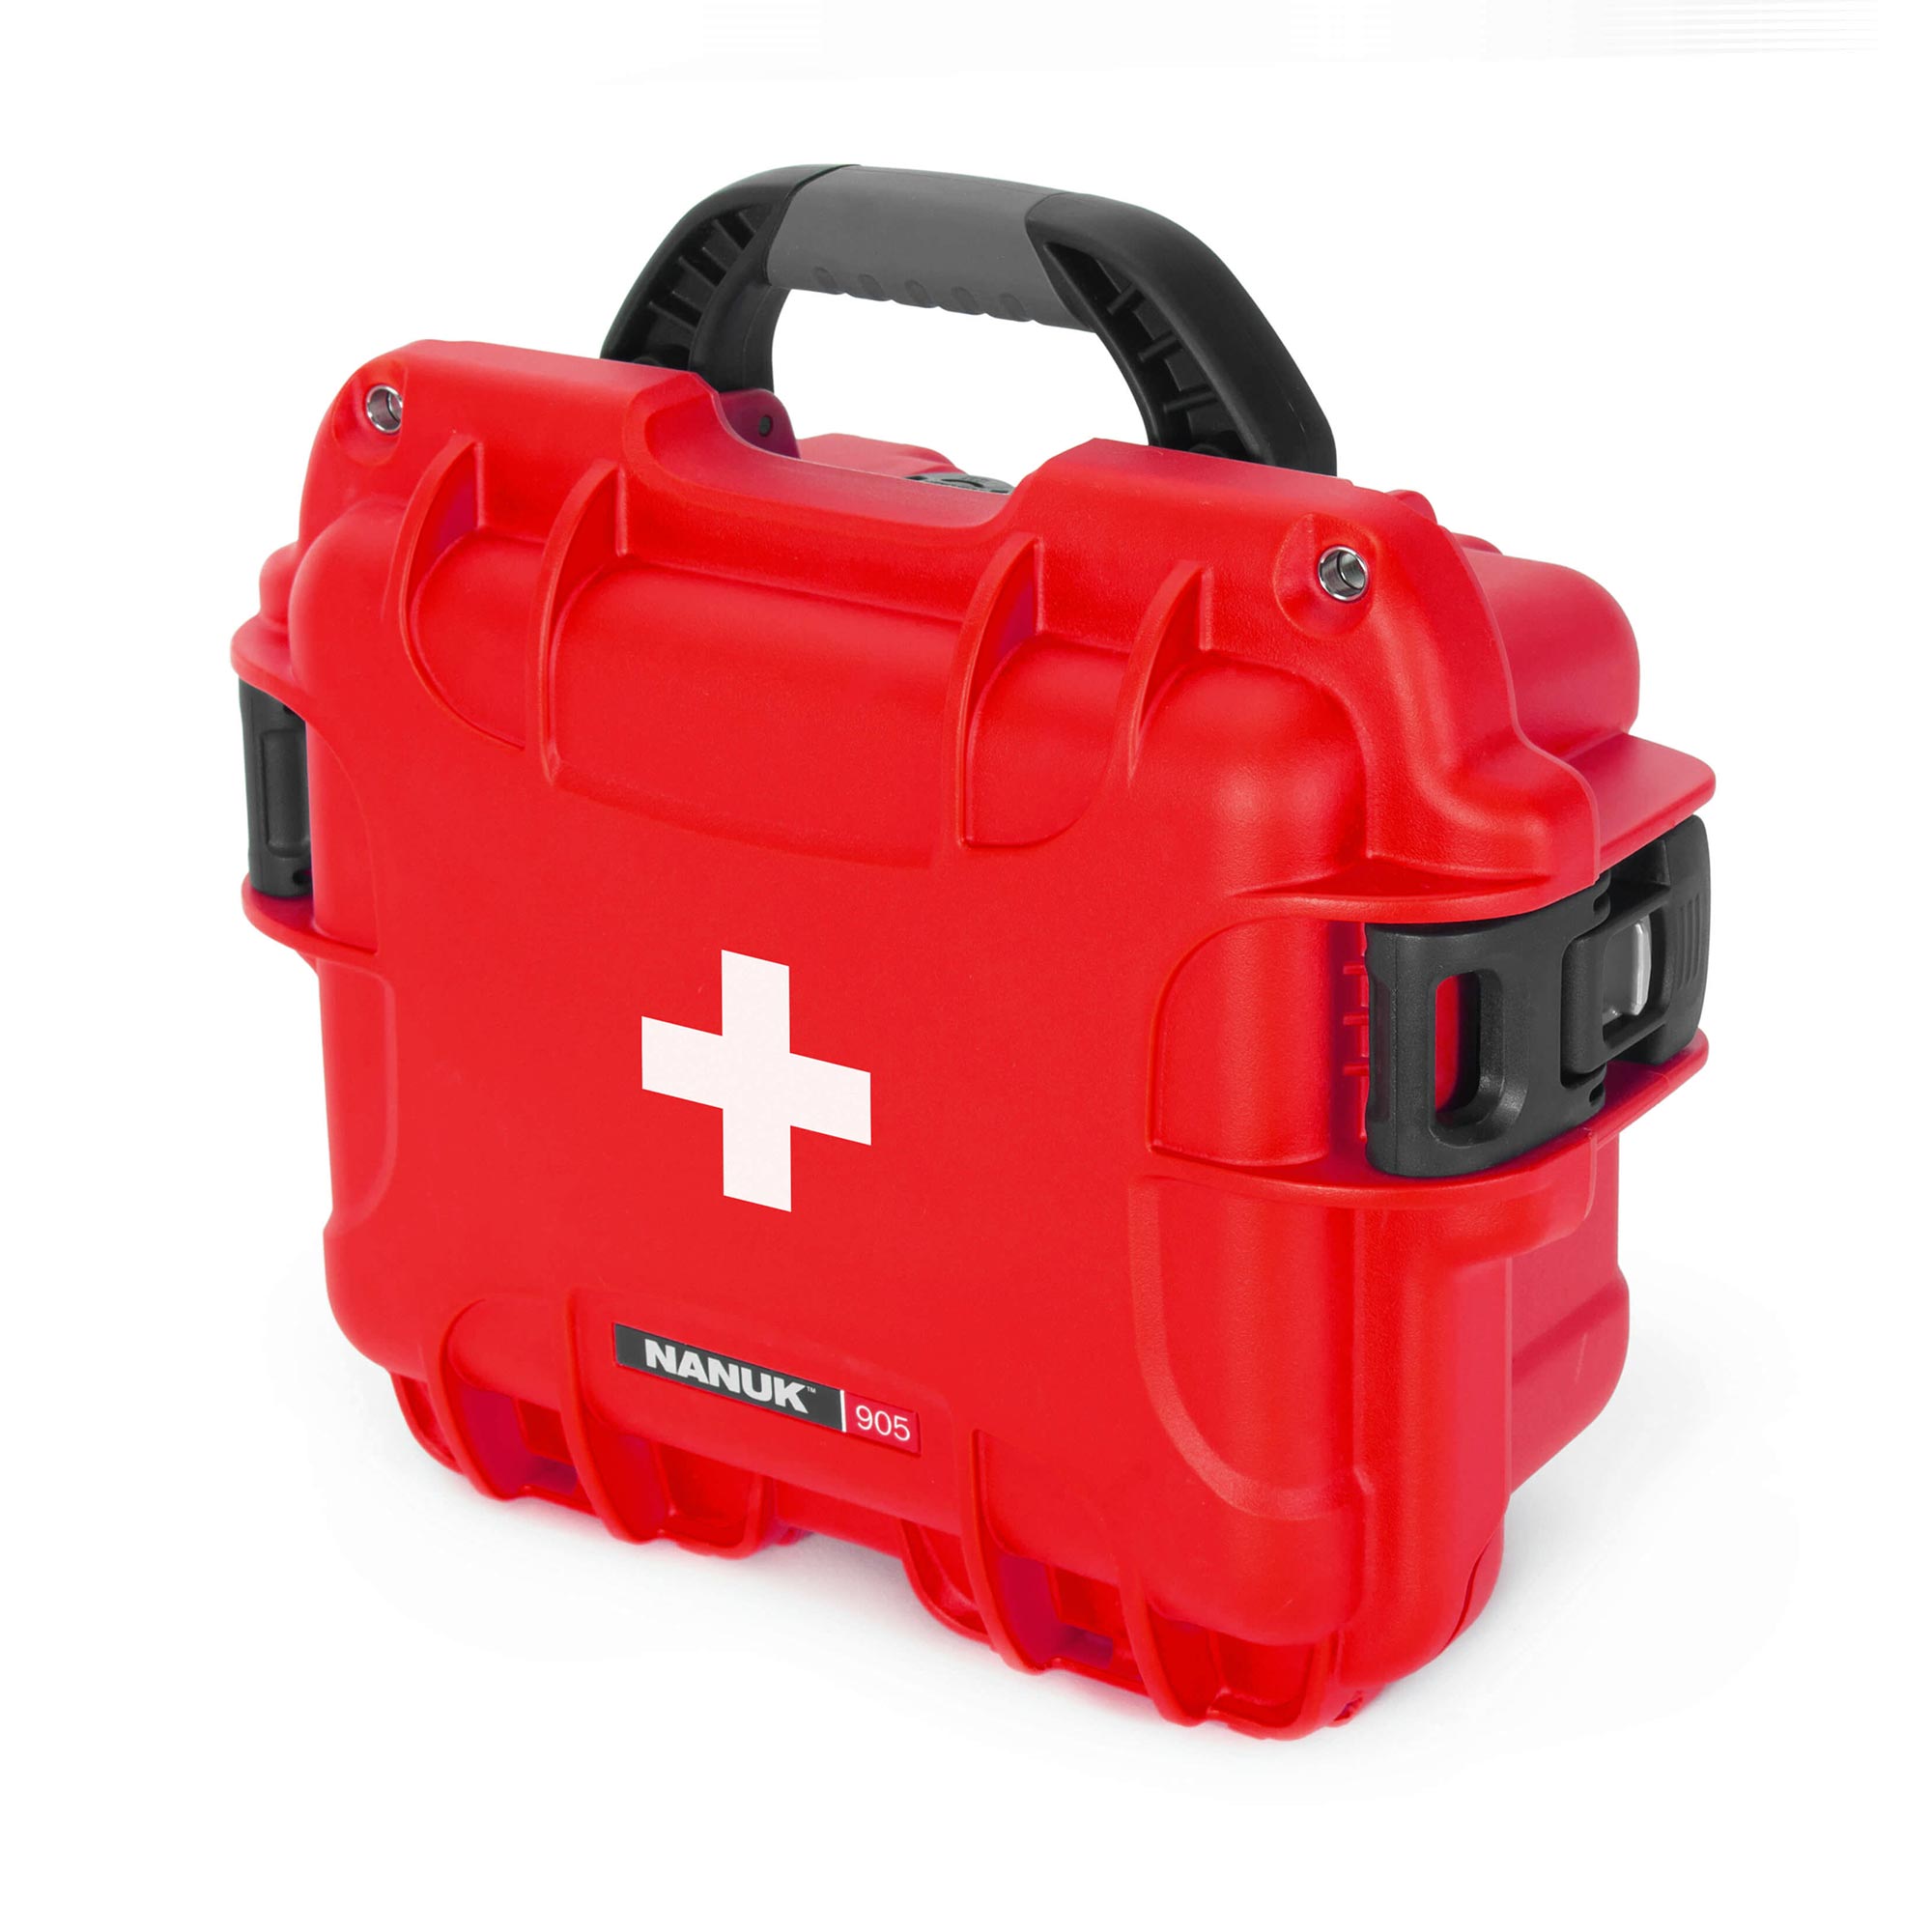 NANUK 905 First Aid valise-Outdoor Valise-Rouge-NANUK